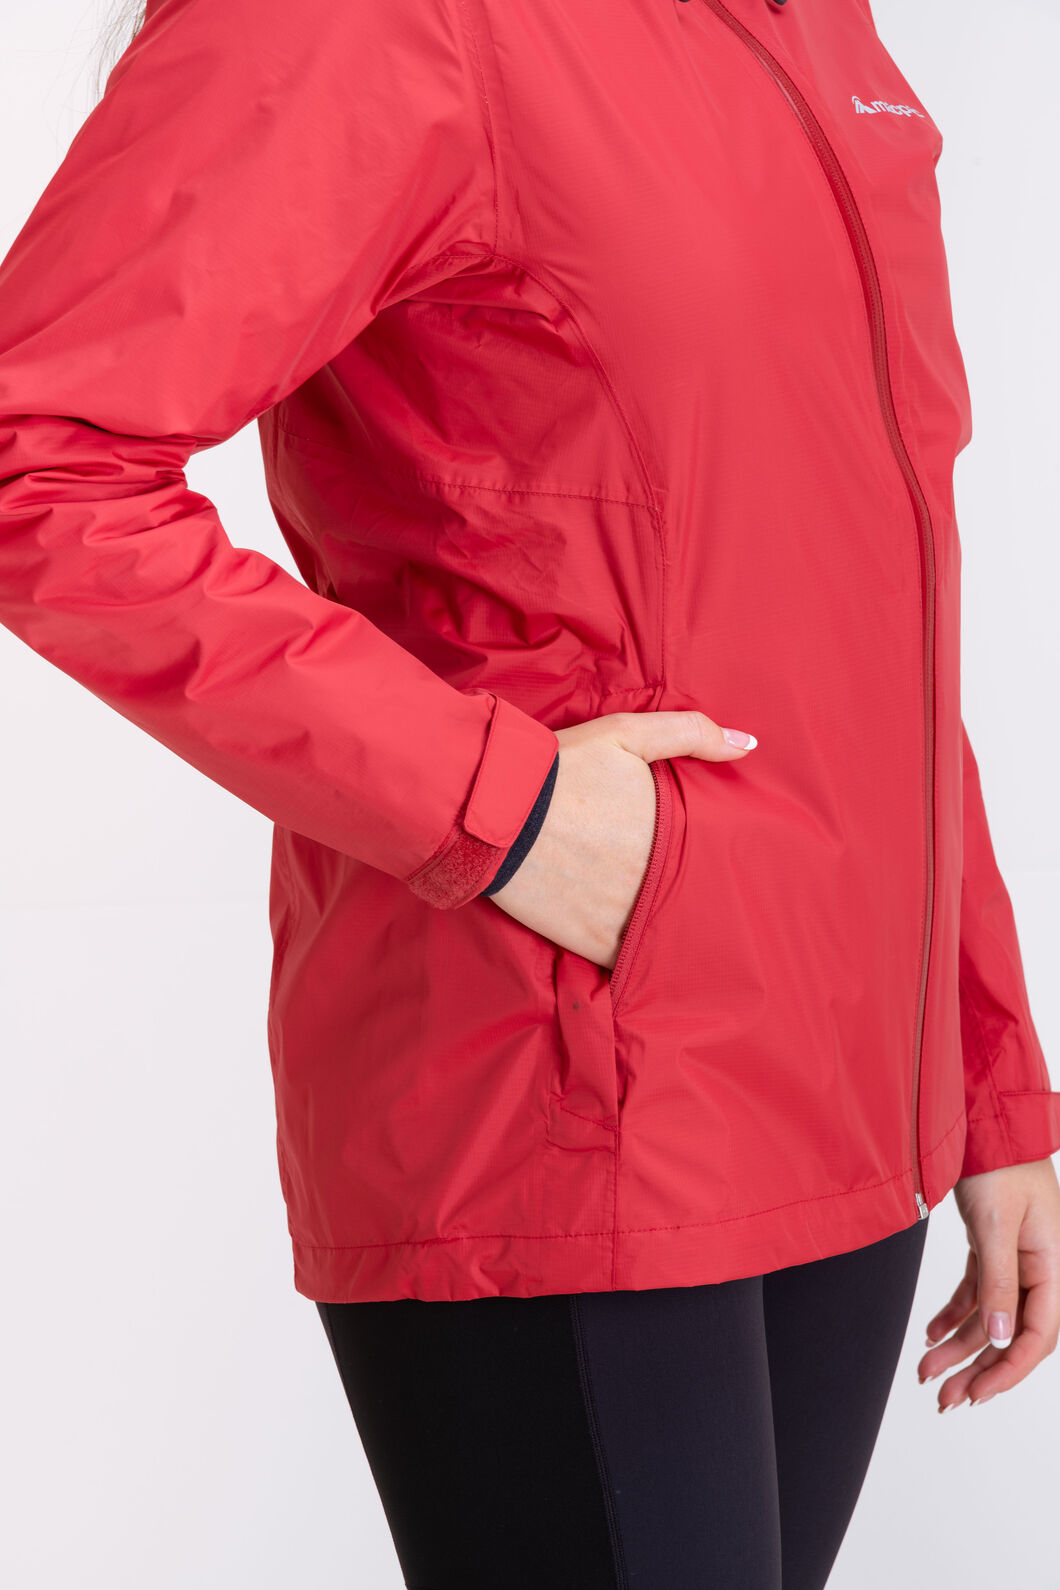 Macpac Women's Mistral Rain Jacket | Macpac